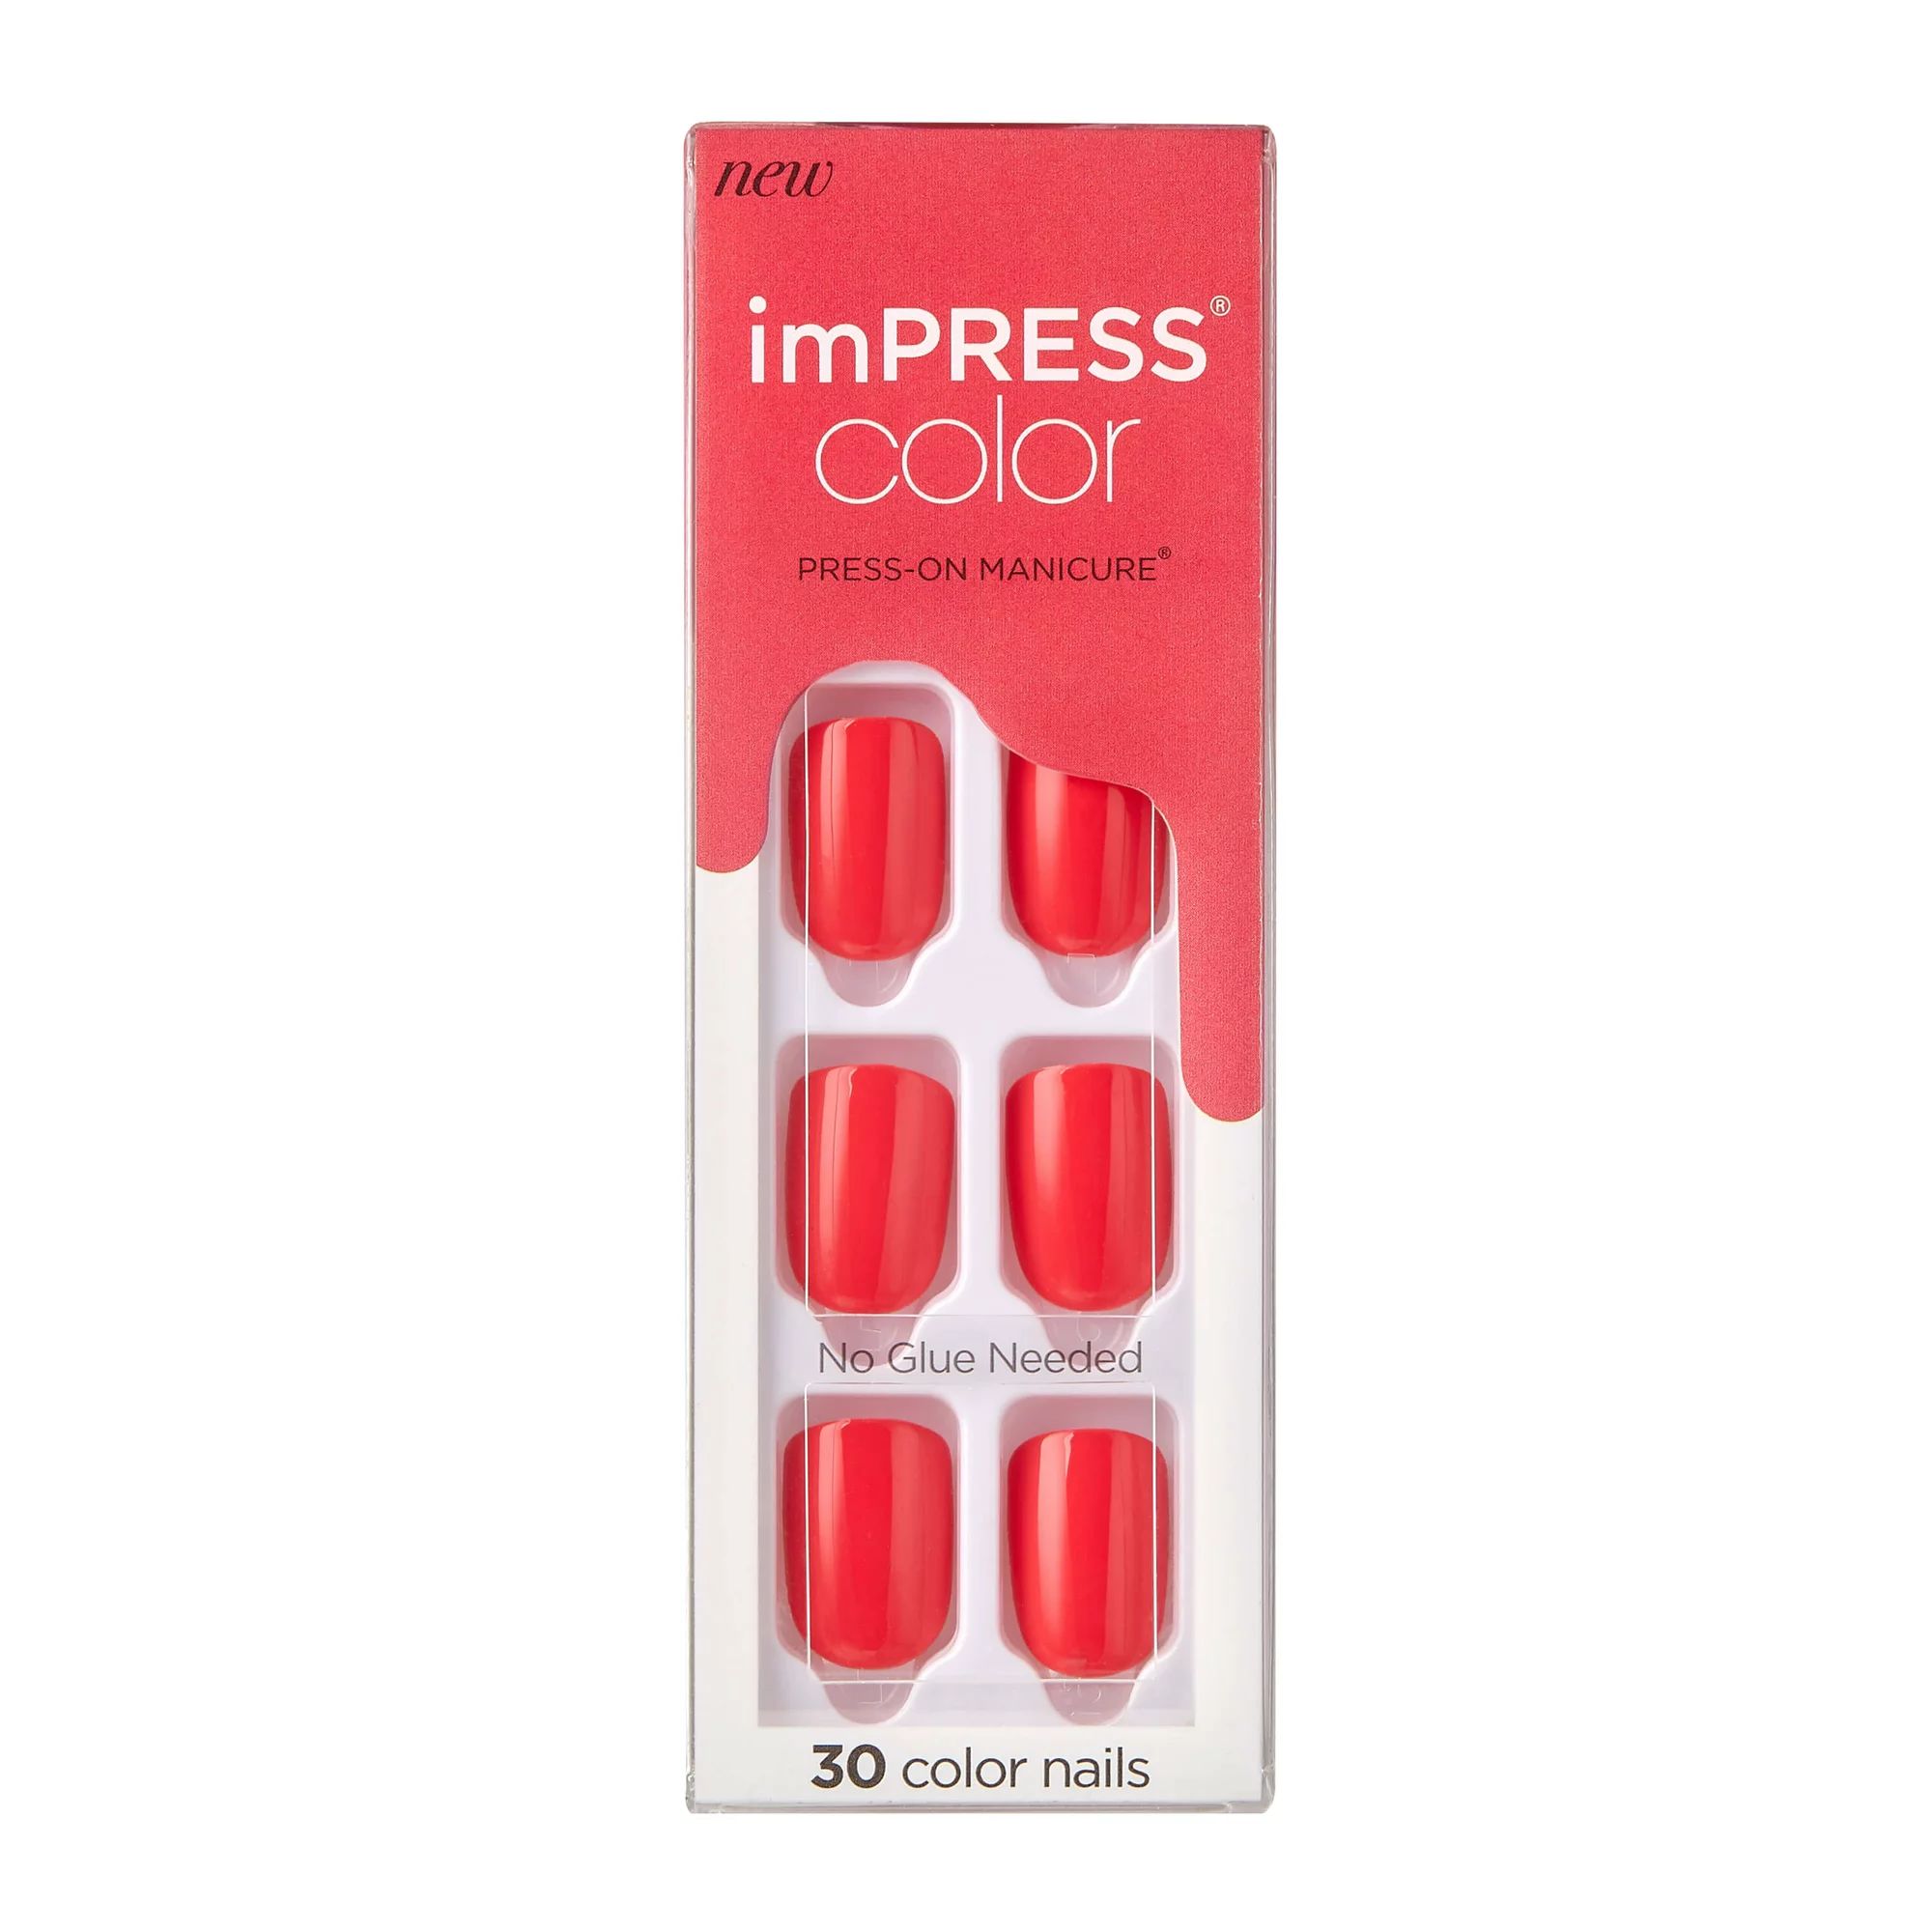 KISS imPRESS Color Press-on Manicure - Corally Crazy, Short | Walmart (US)